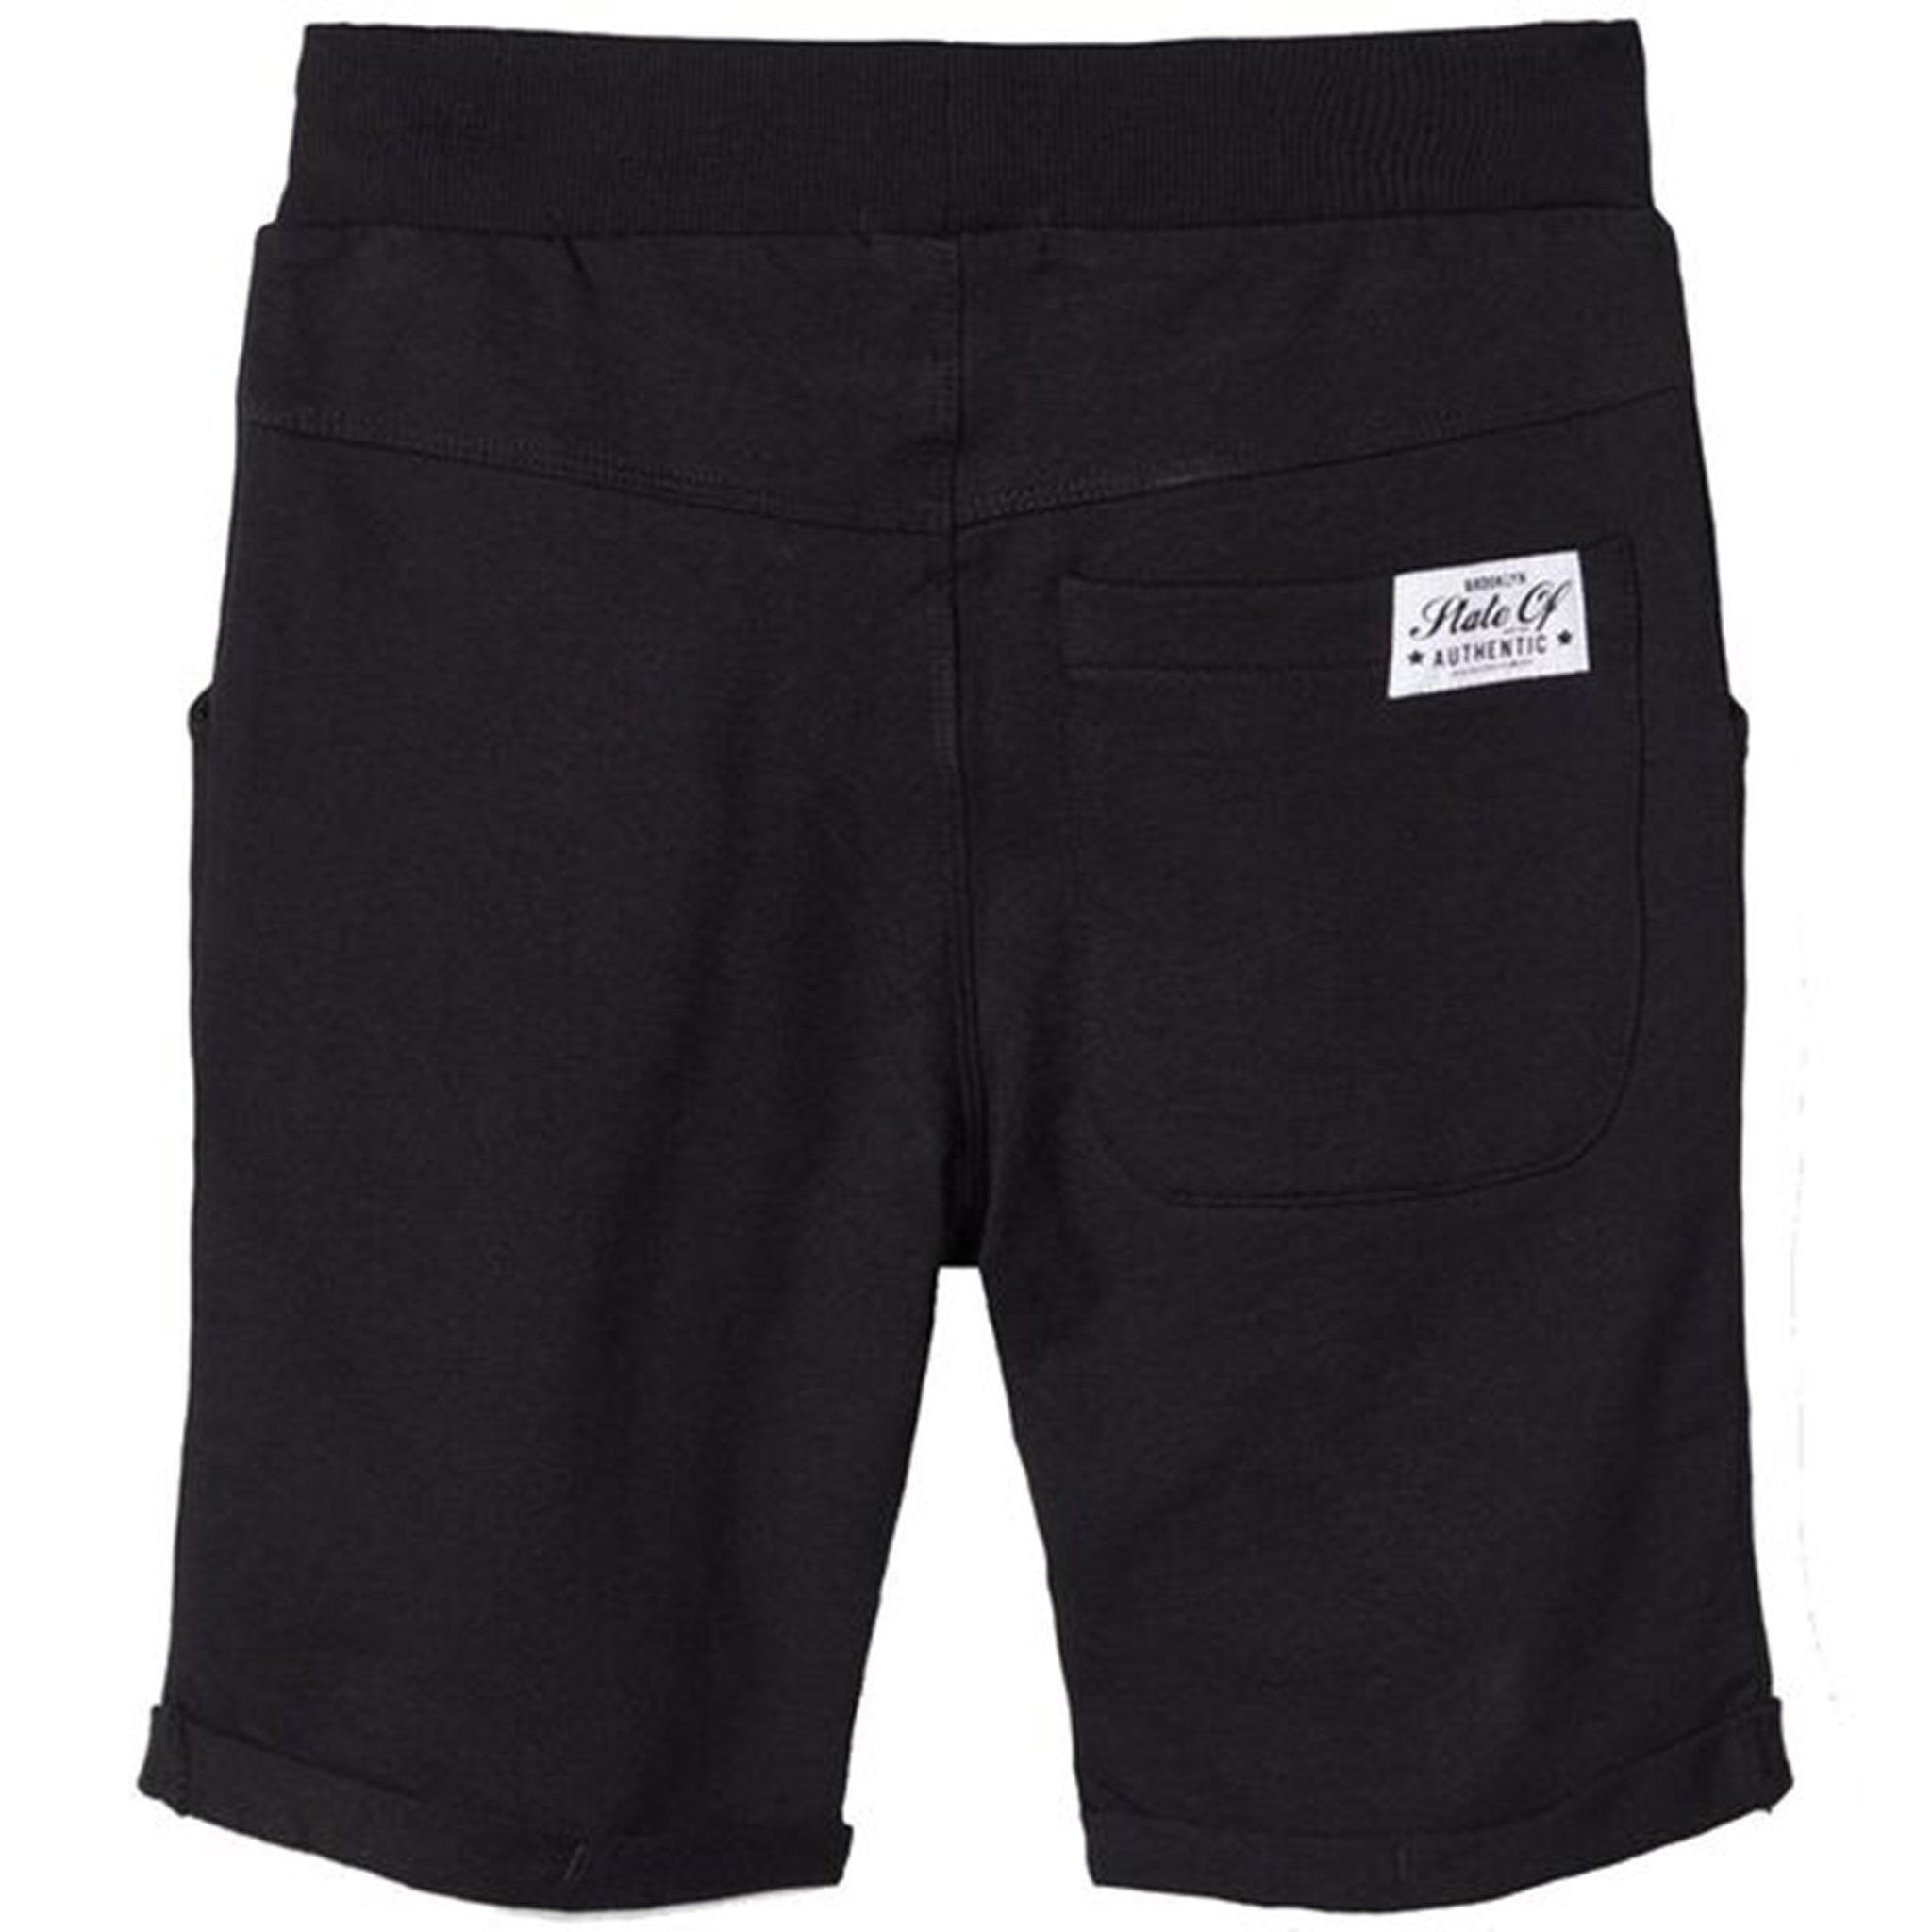 Name it Black Vermo Shorts 2